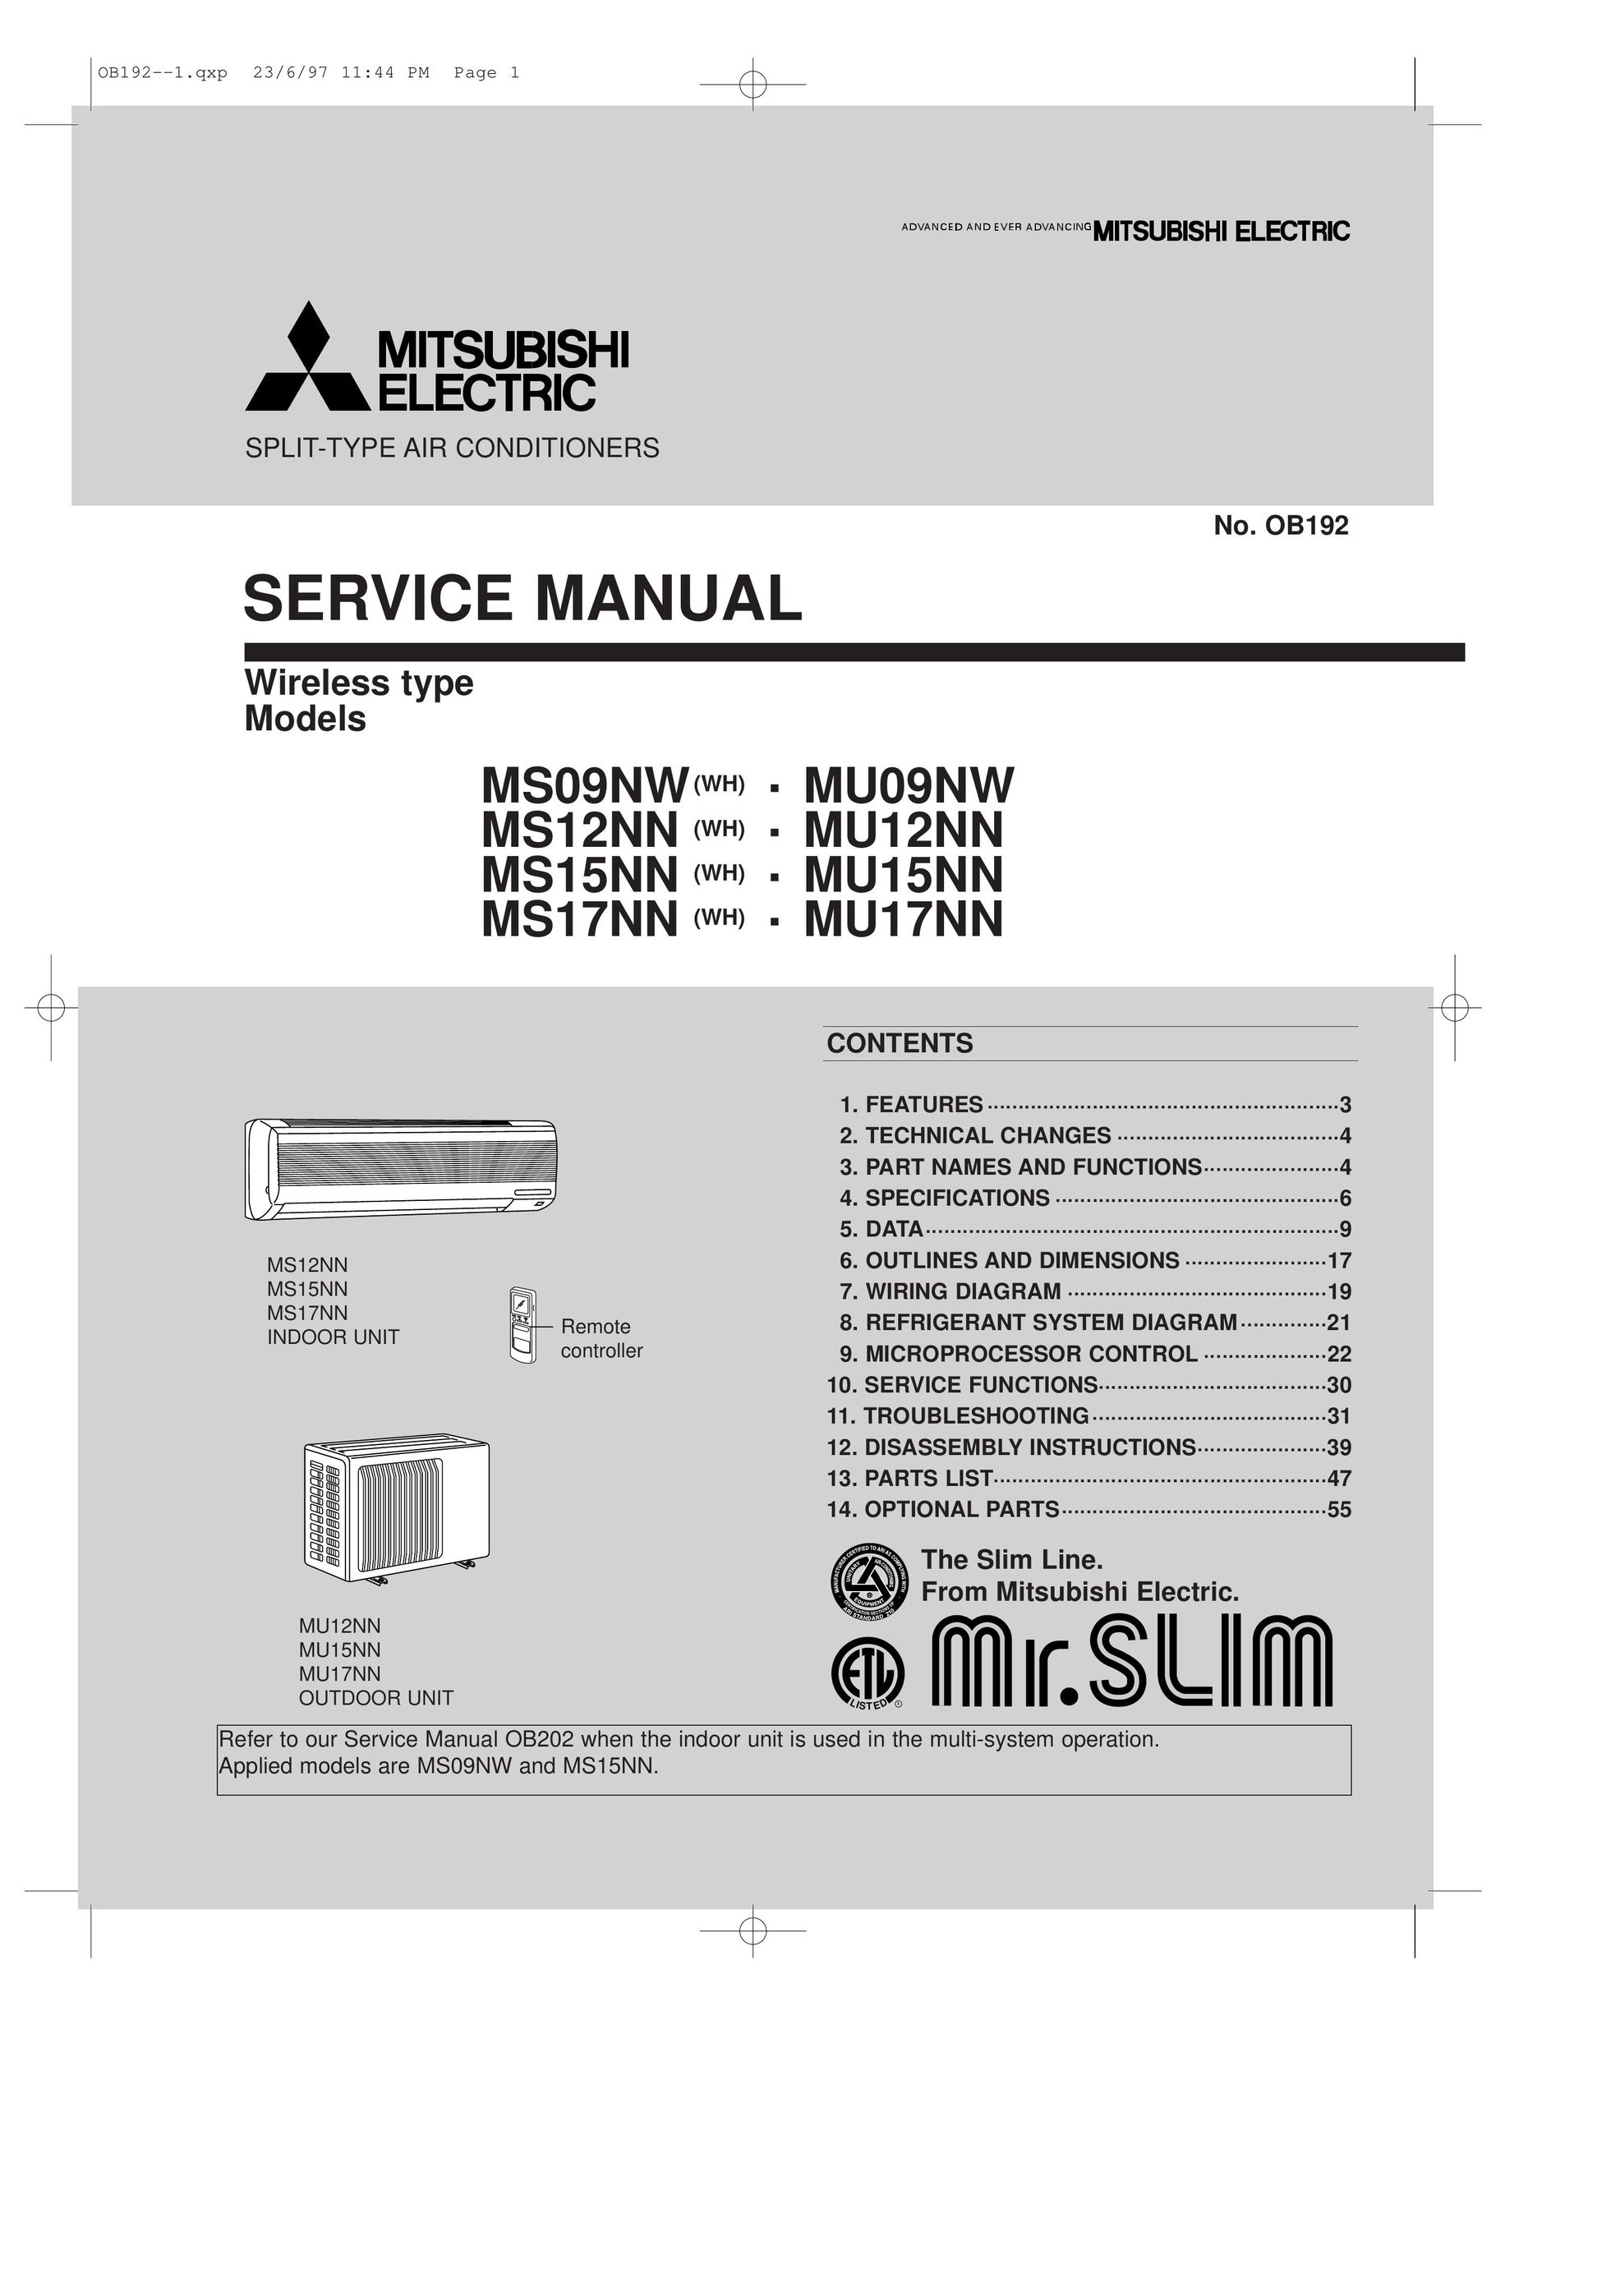 Mitsumi electronic MU17NN Air Conditioner User Manual